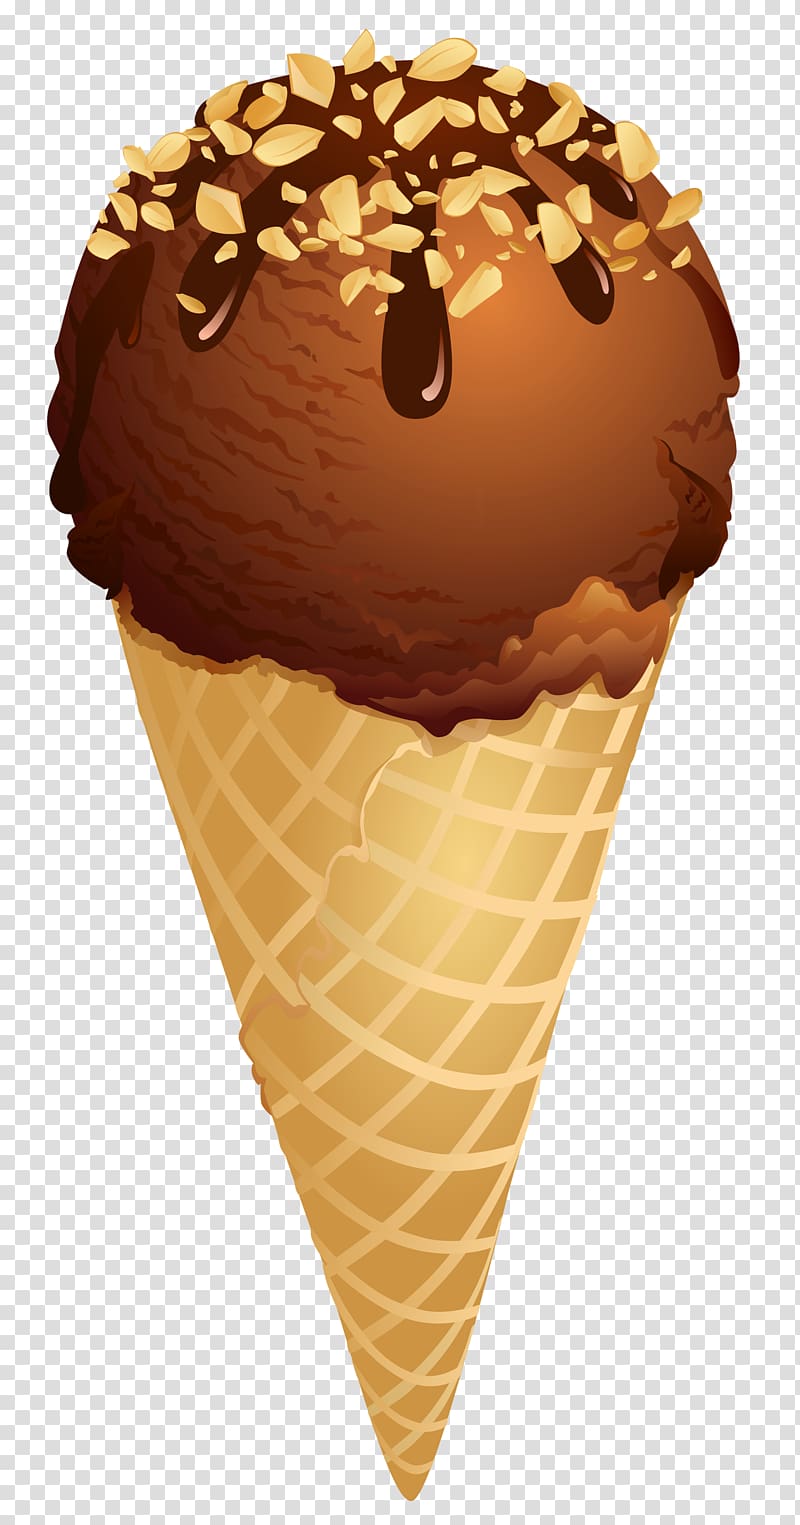 Ice cream cone Chocolate ice cream , Chocolate Ice Cream Cone , chocolate ice cream transparent background PNG clipart